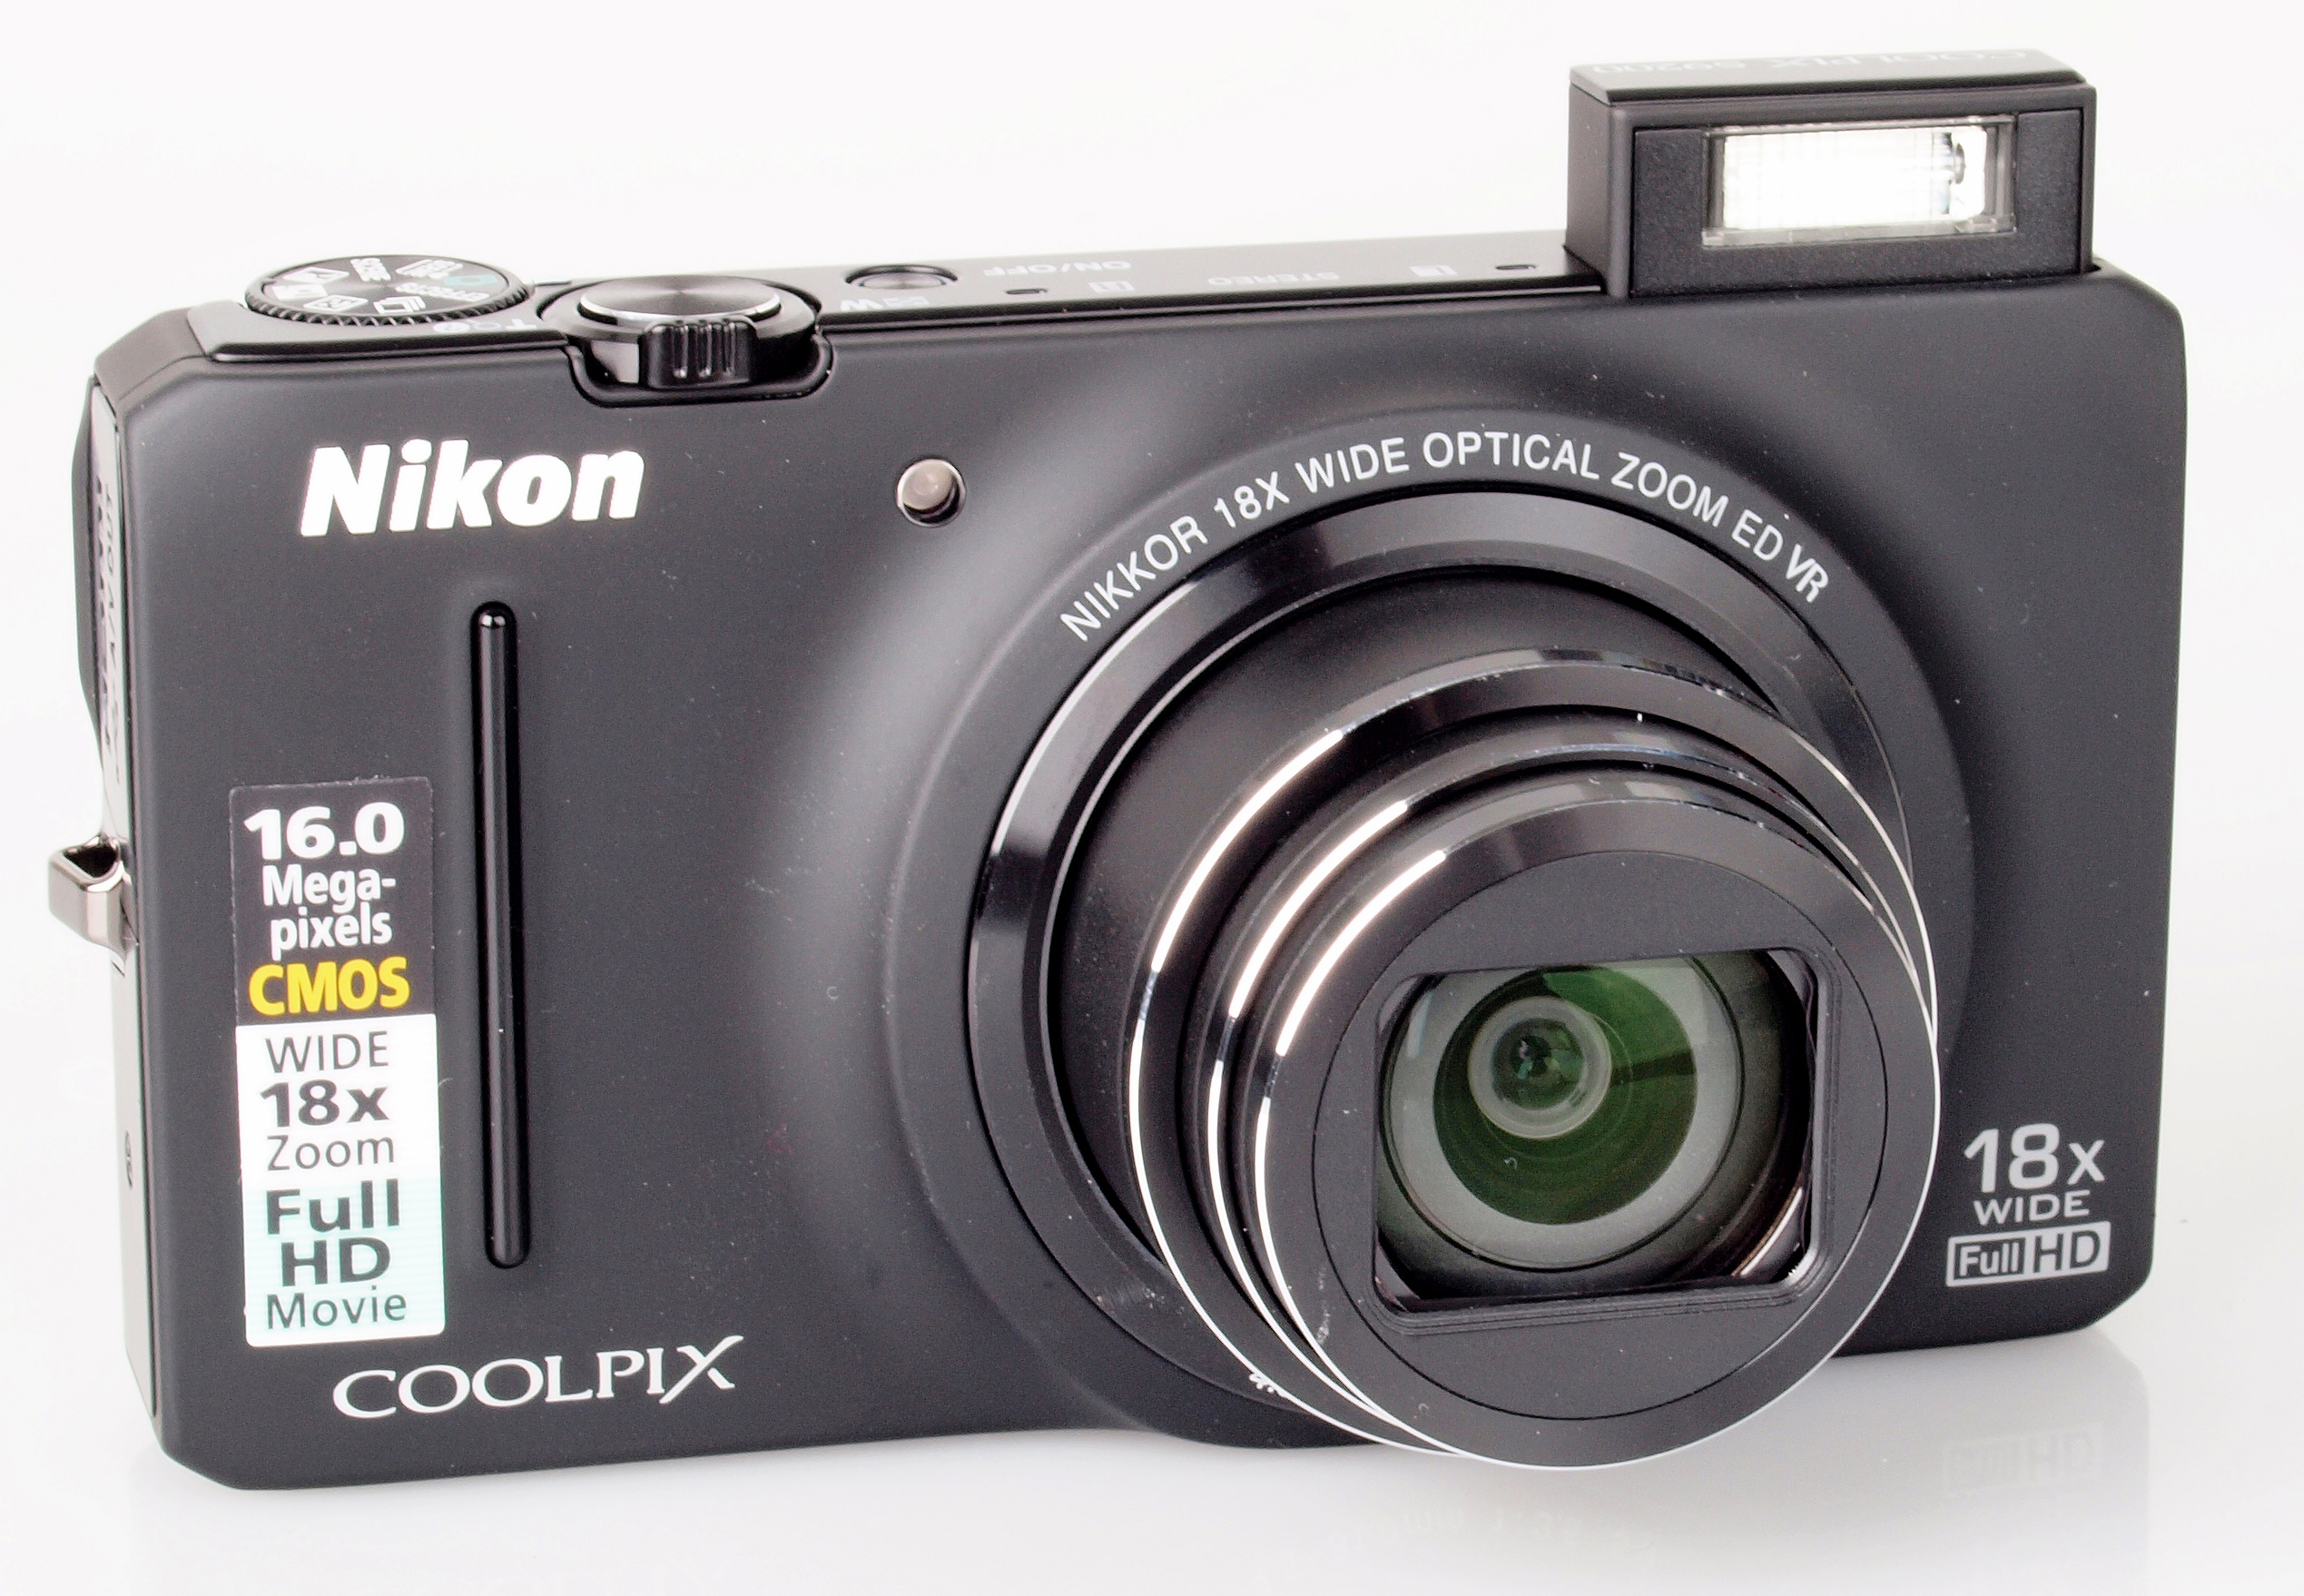 Nikon Professional Digital Camera – Every Single Photographer’s Dream